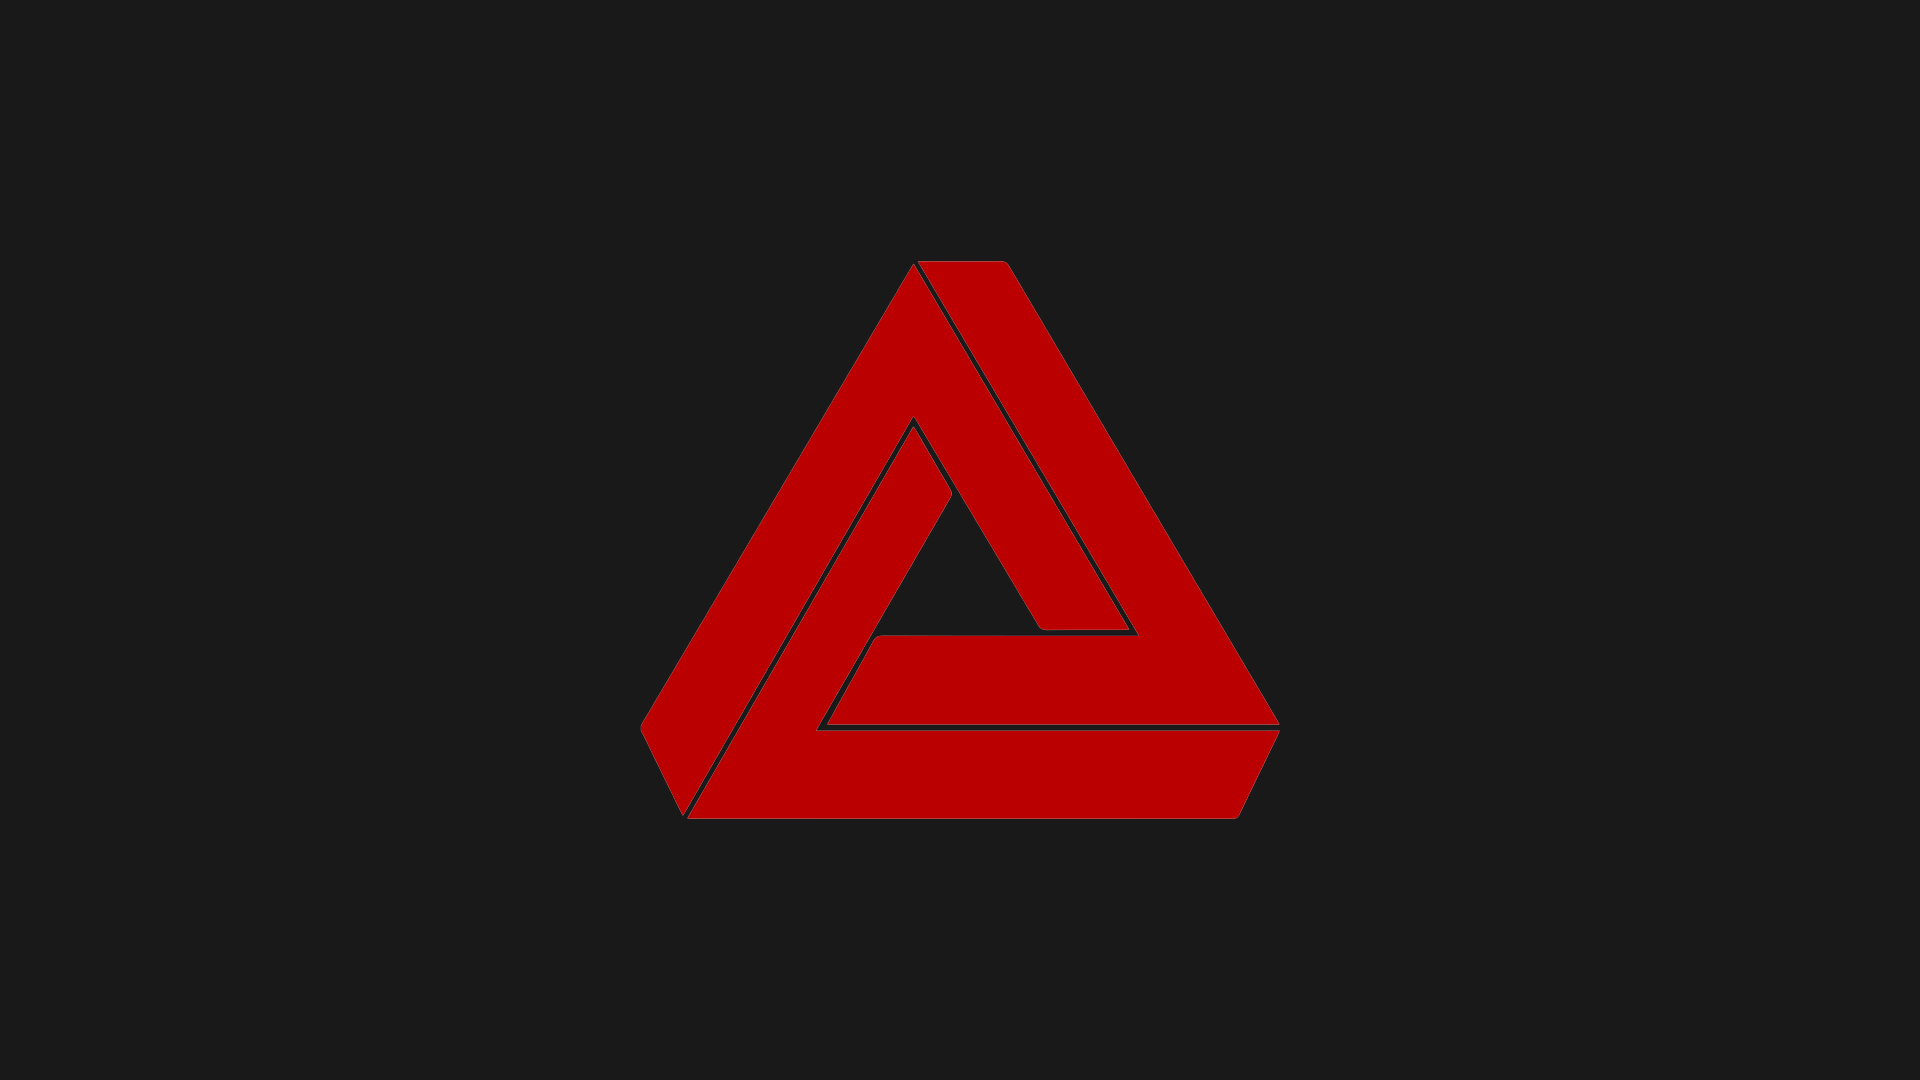 General 1920x1080 Penrose triangle black background minimalism simple background red black